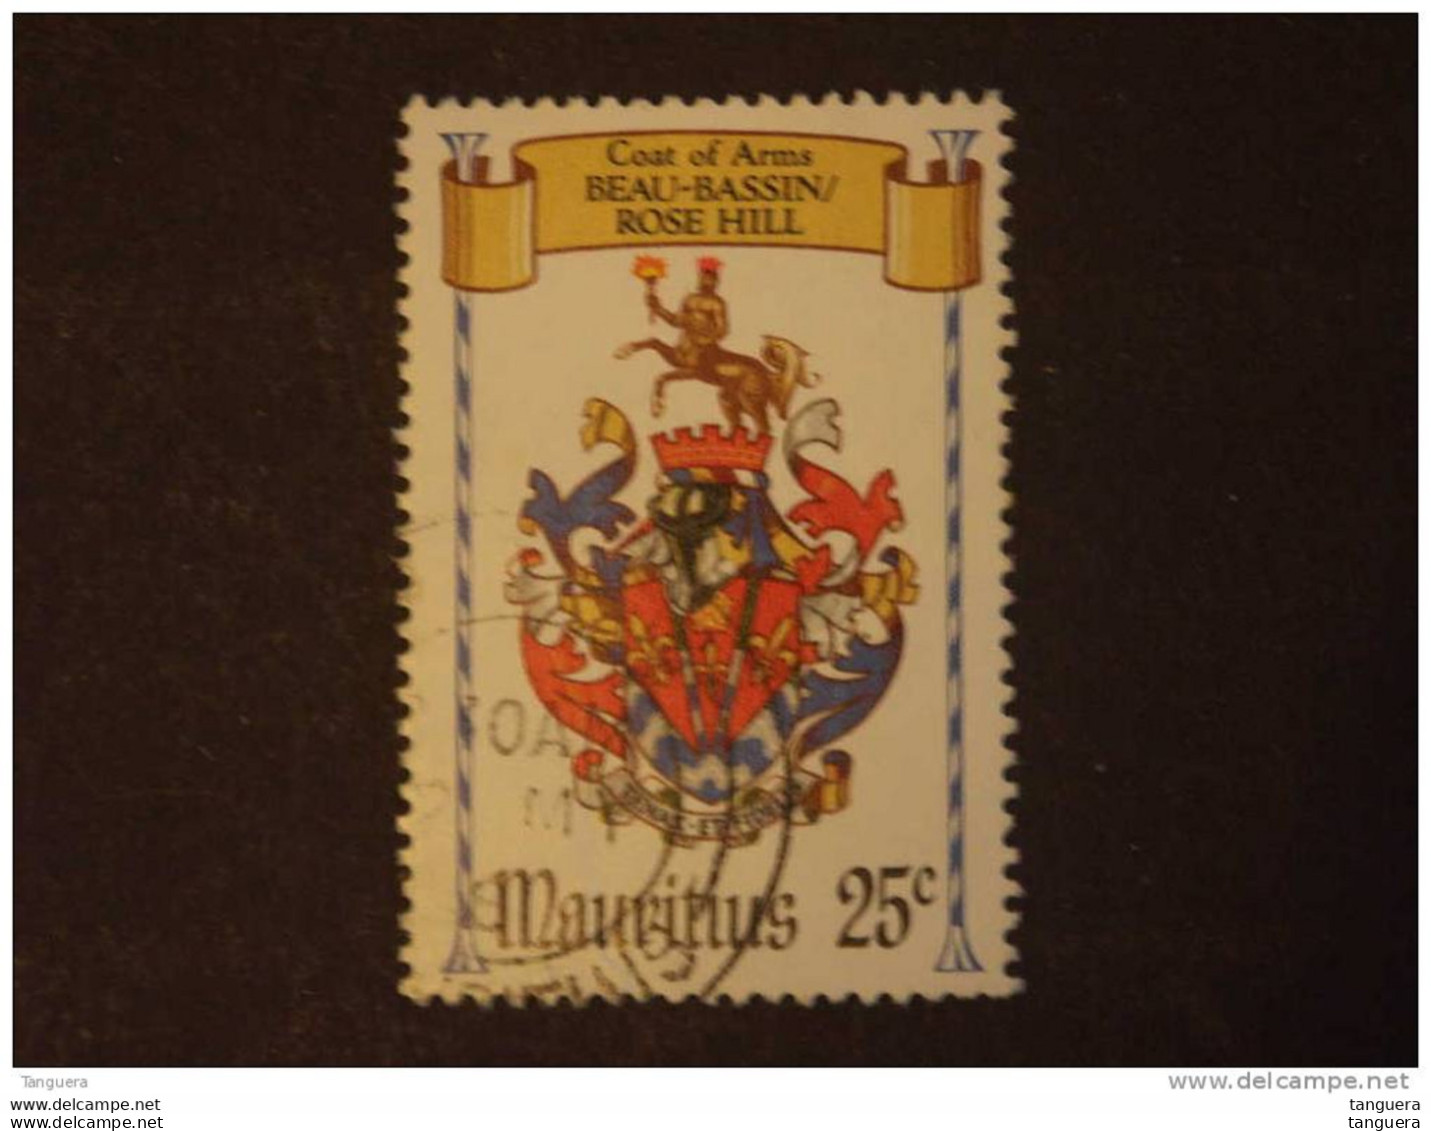 Mauritius Maurice 1981 Armoiries Des Villes Wapenschild Beau-Bassin/Rose Hill Yv 523 O - Mauricio (1968-...)